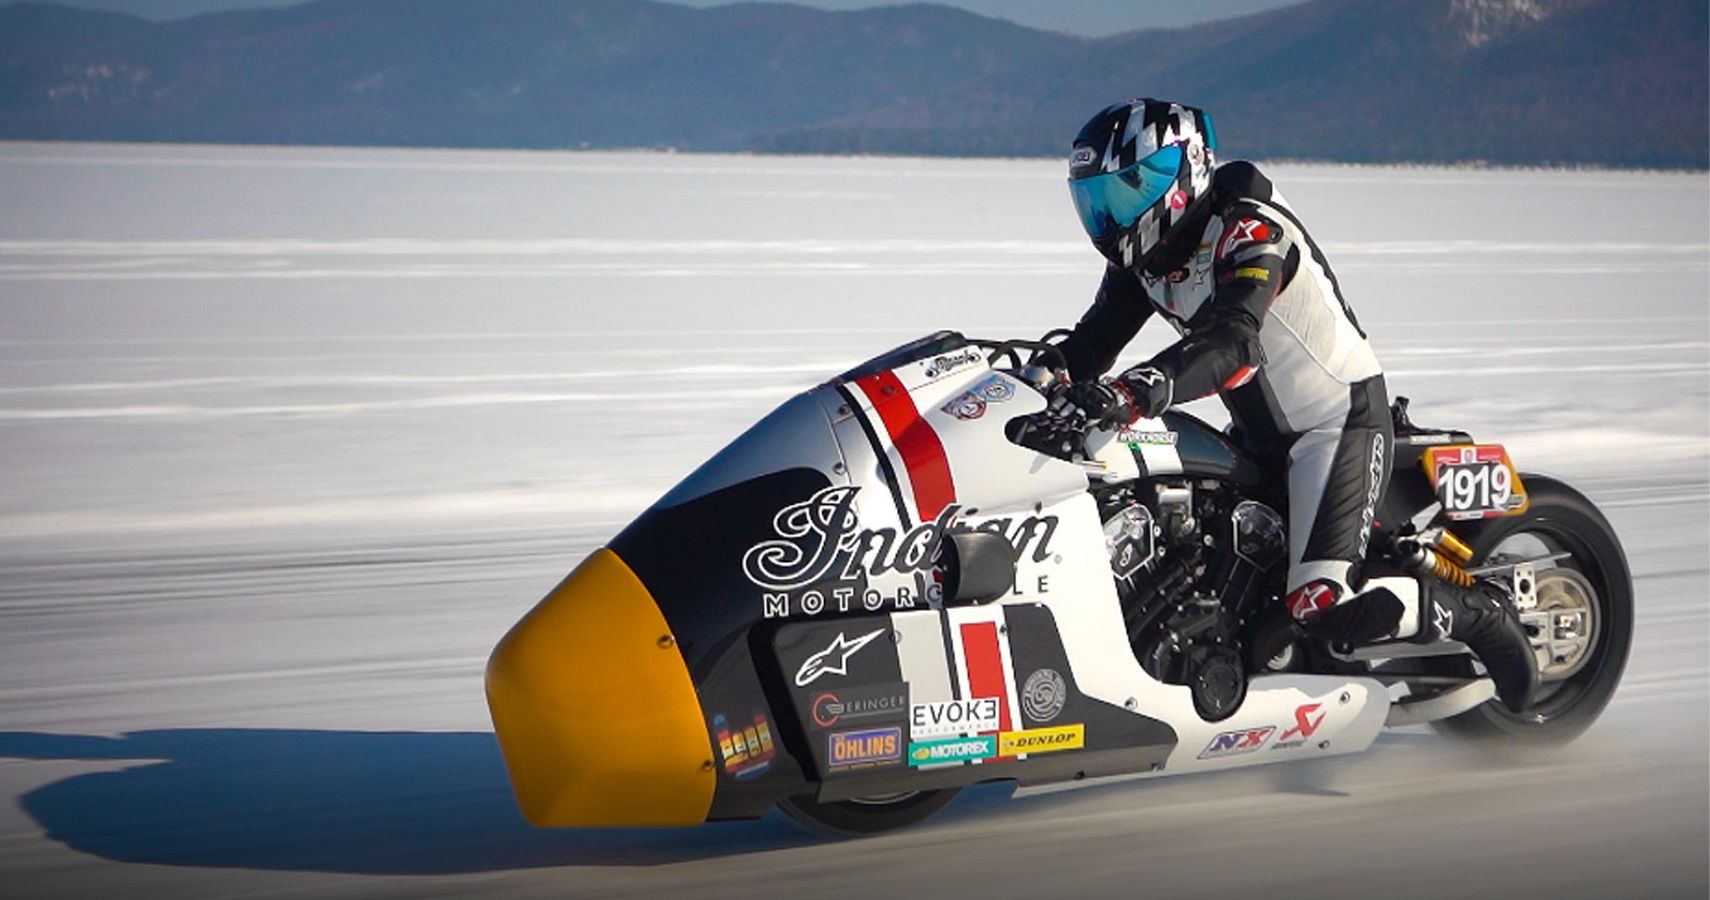 IndianxWorkhorse Appaloose motorcycle racing on Lake Baikal in Russia